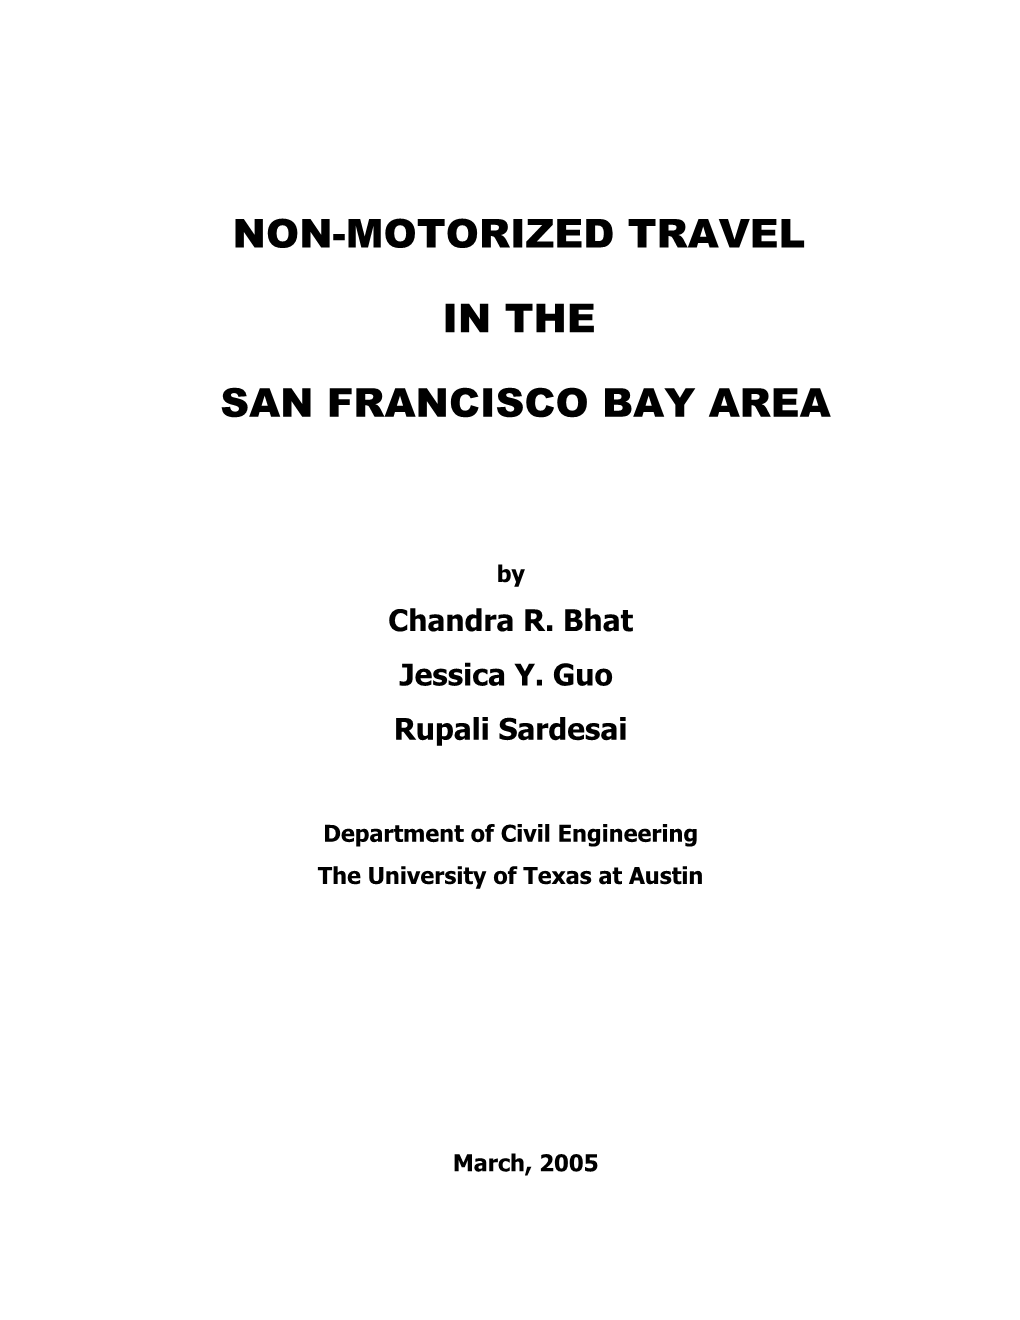 Non-Motorized Travel